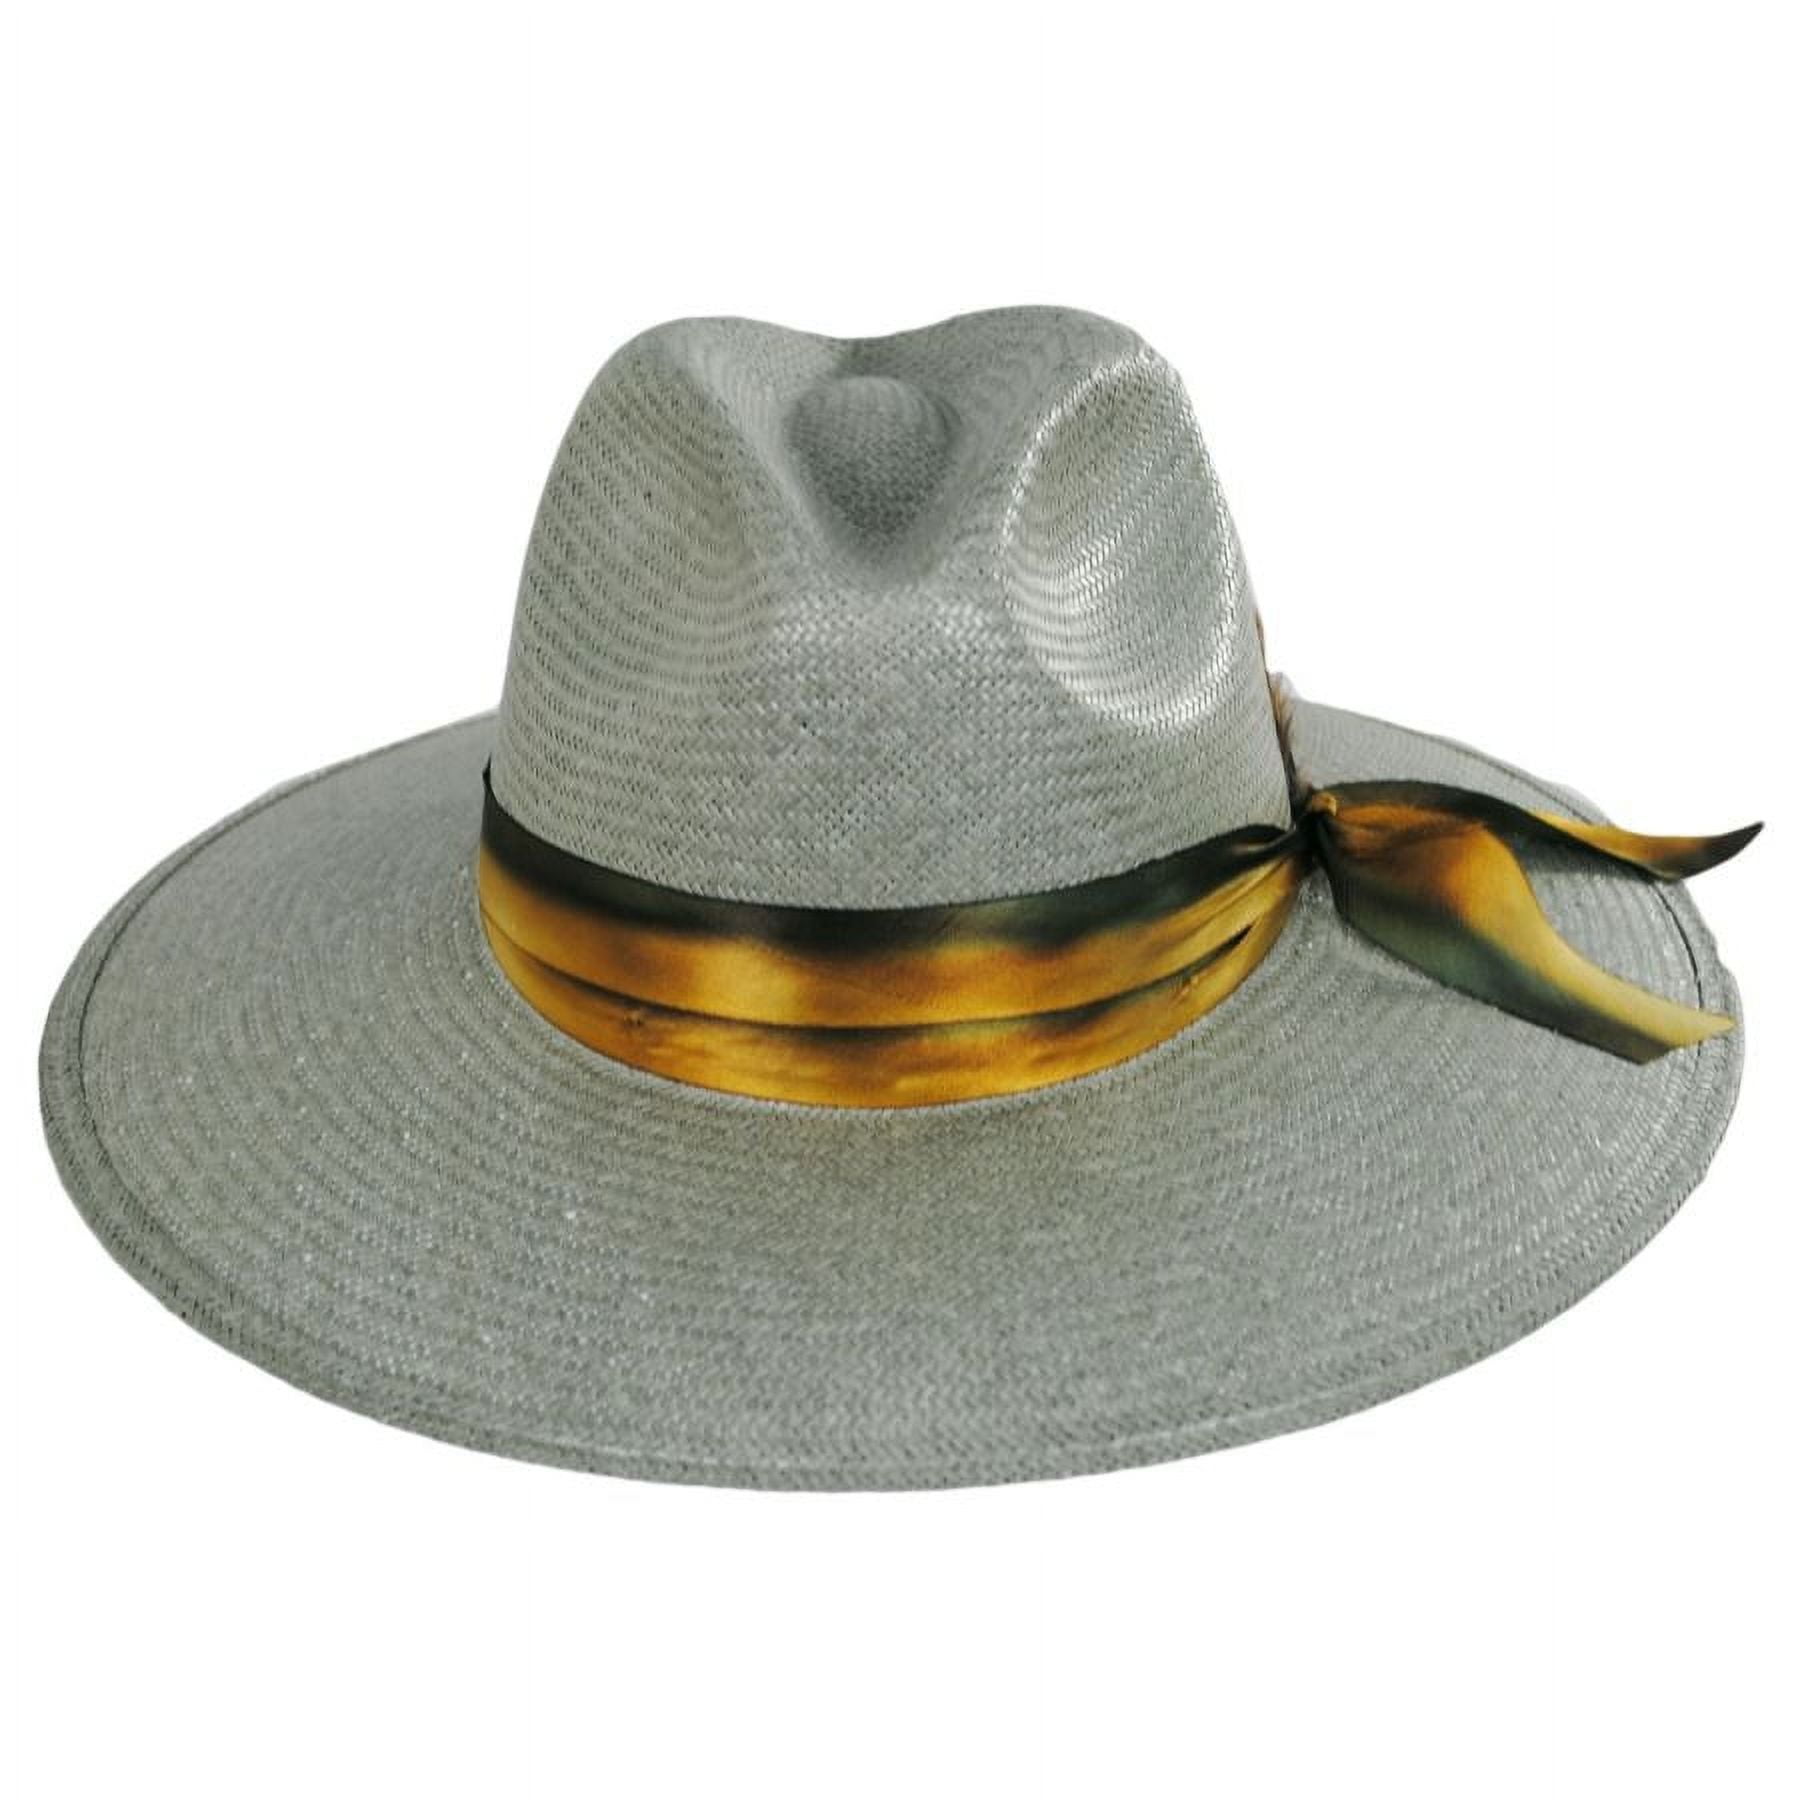 Stetson Caelus Seafoam Fashion Straw Hat